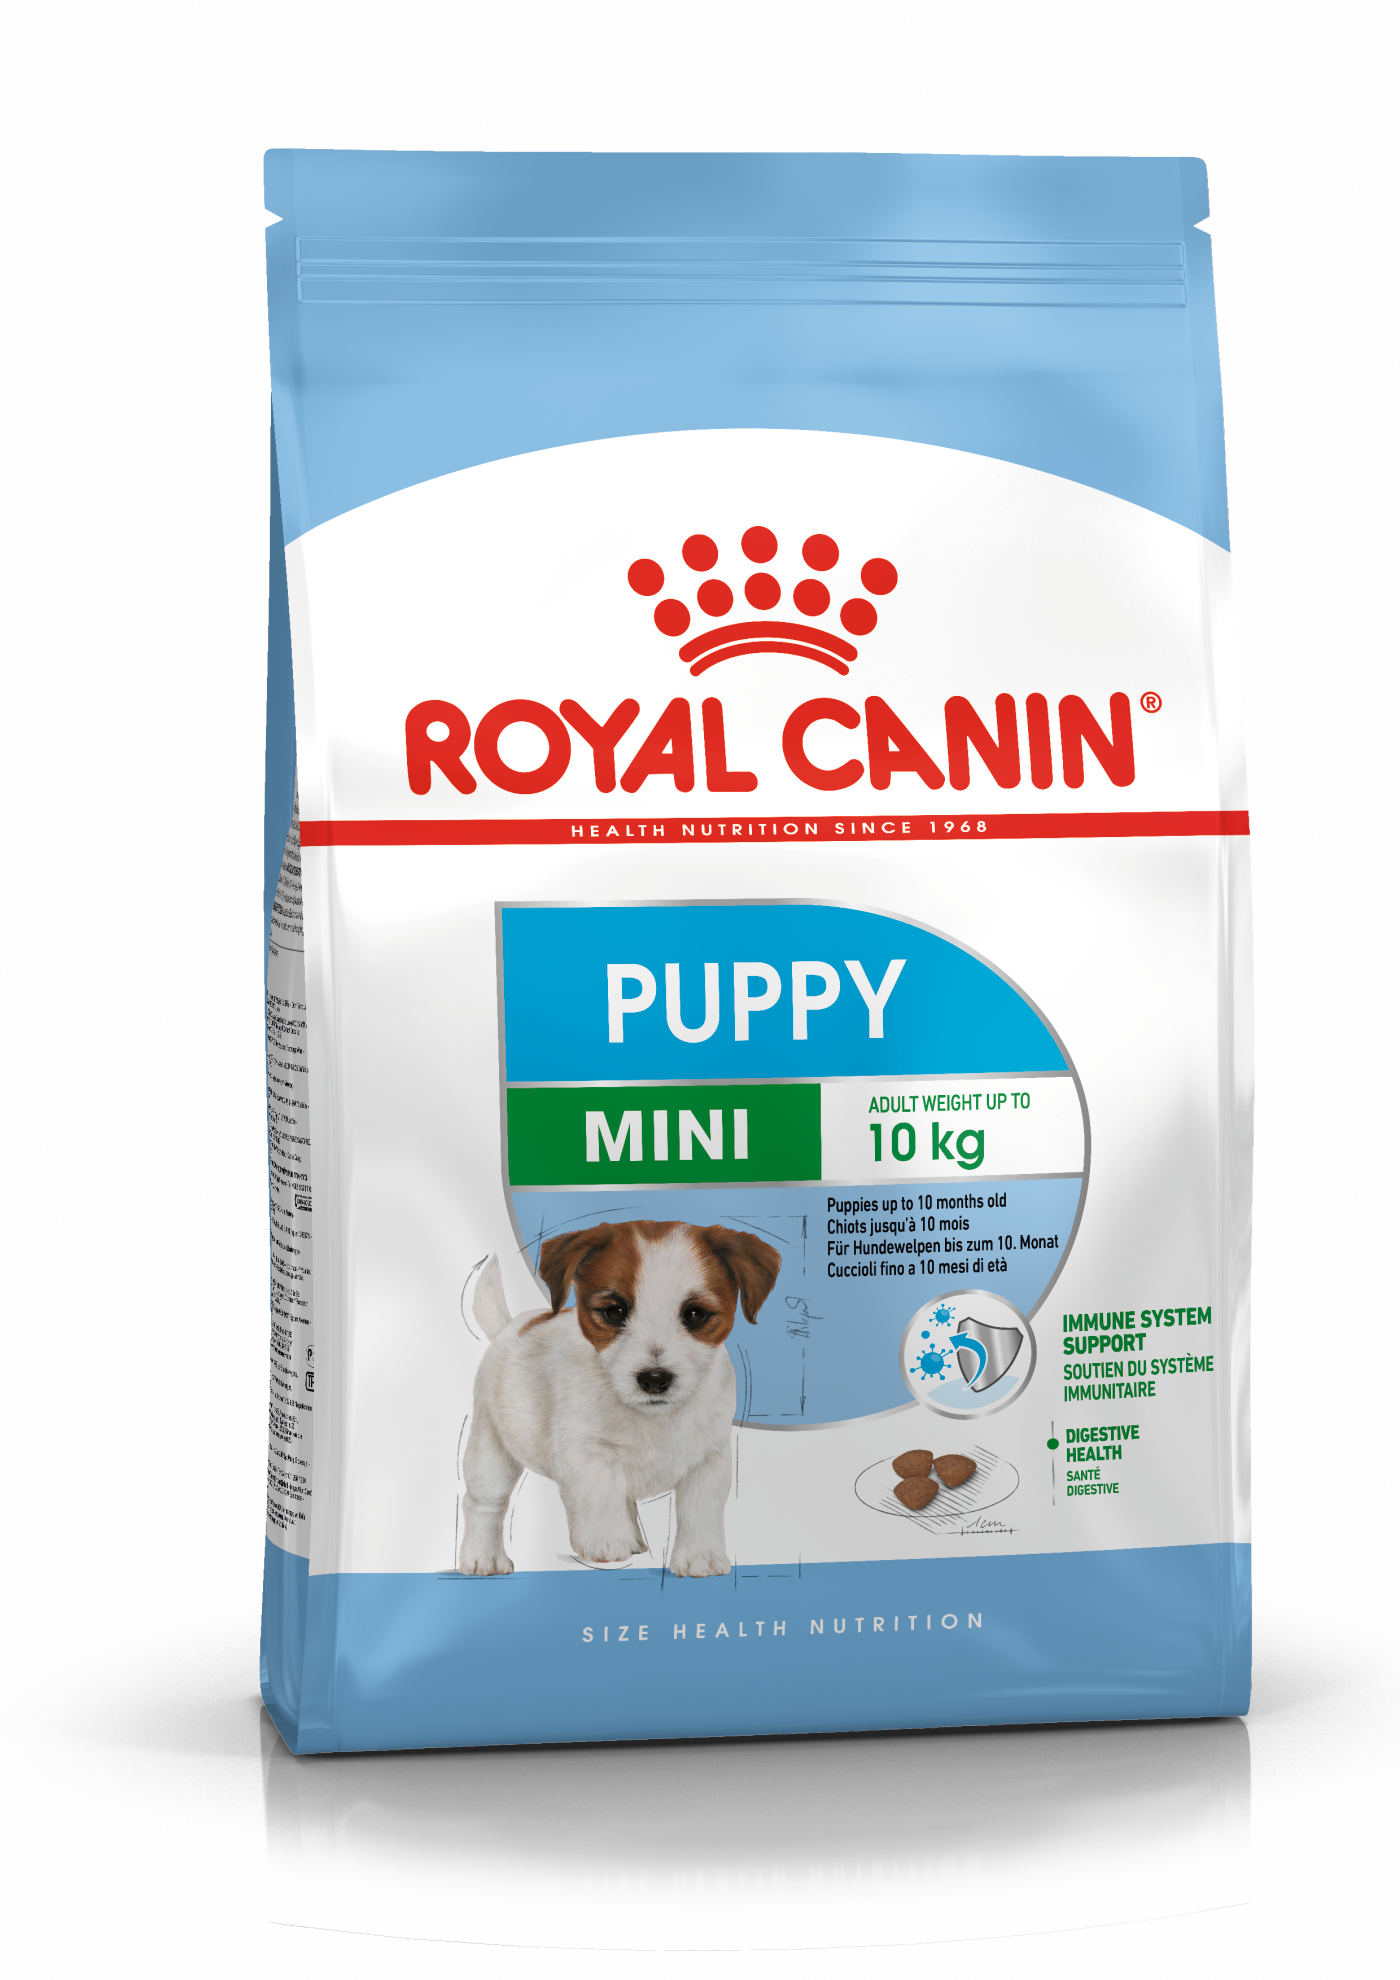 royal canin puppy food chart